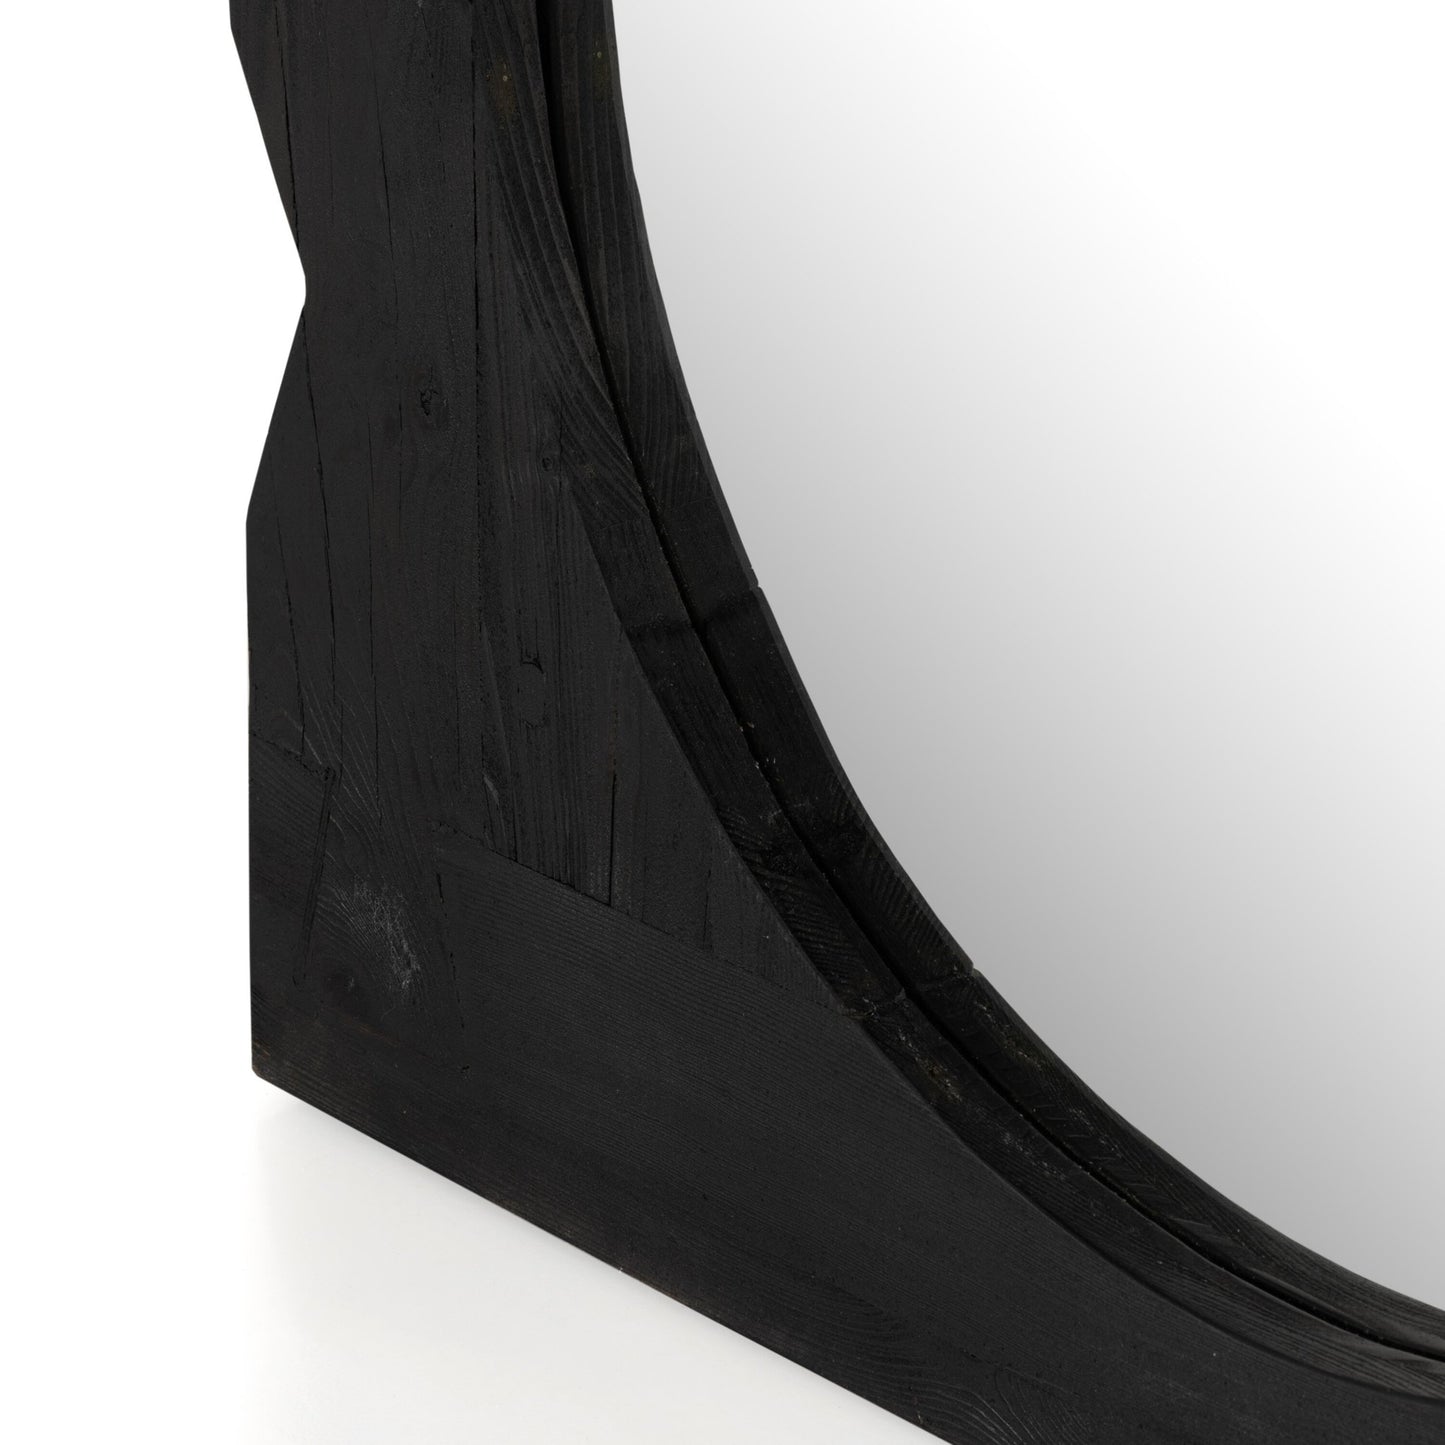 Aldrik mirror-black reclaimed pine